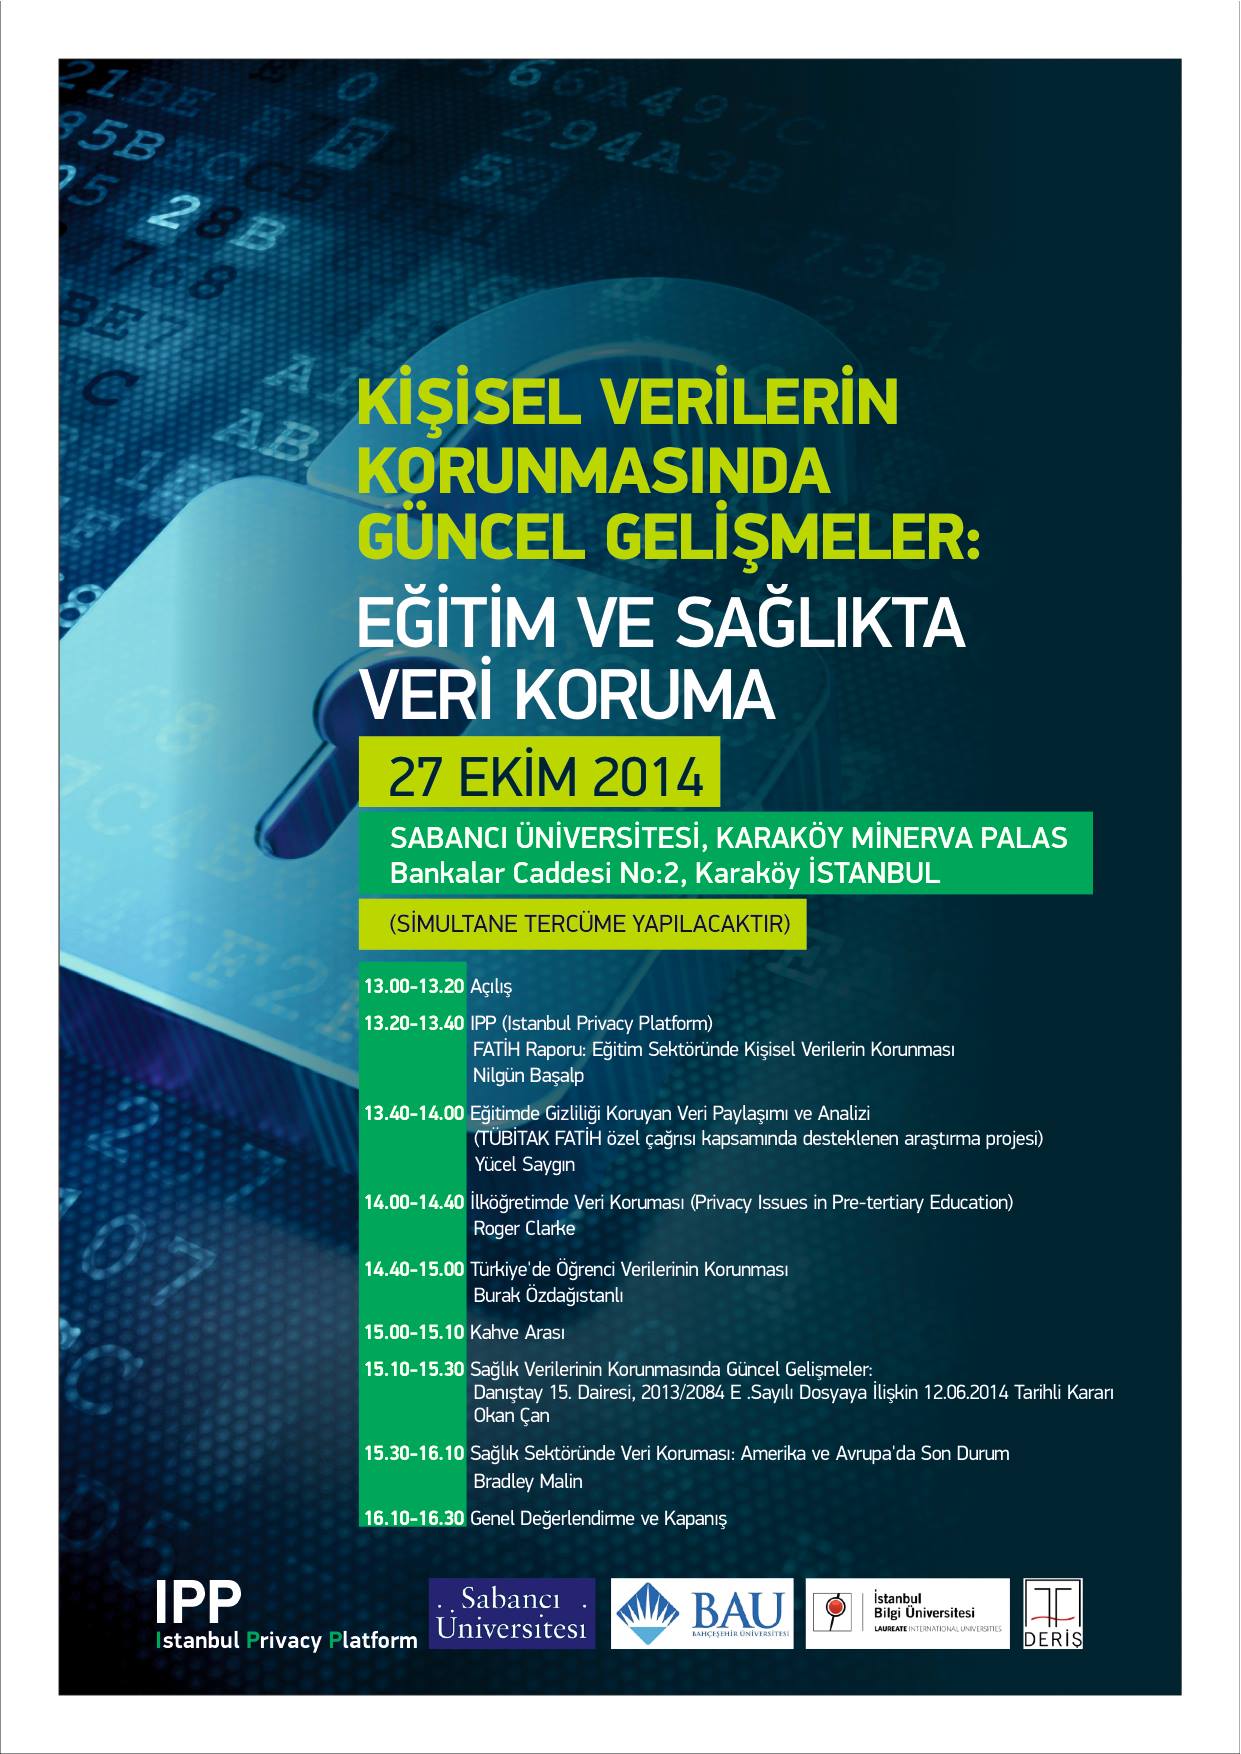 27th October 2014, Data Protection in Education and Health, organized by Istanbul Bilgi University, Bahçeşehir University ve Sabancı University.